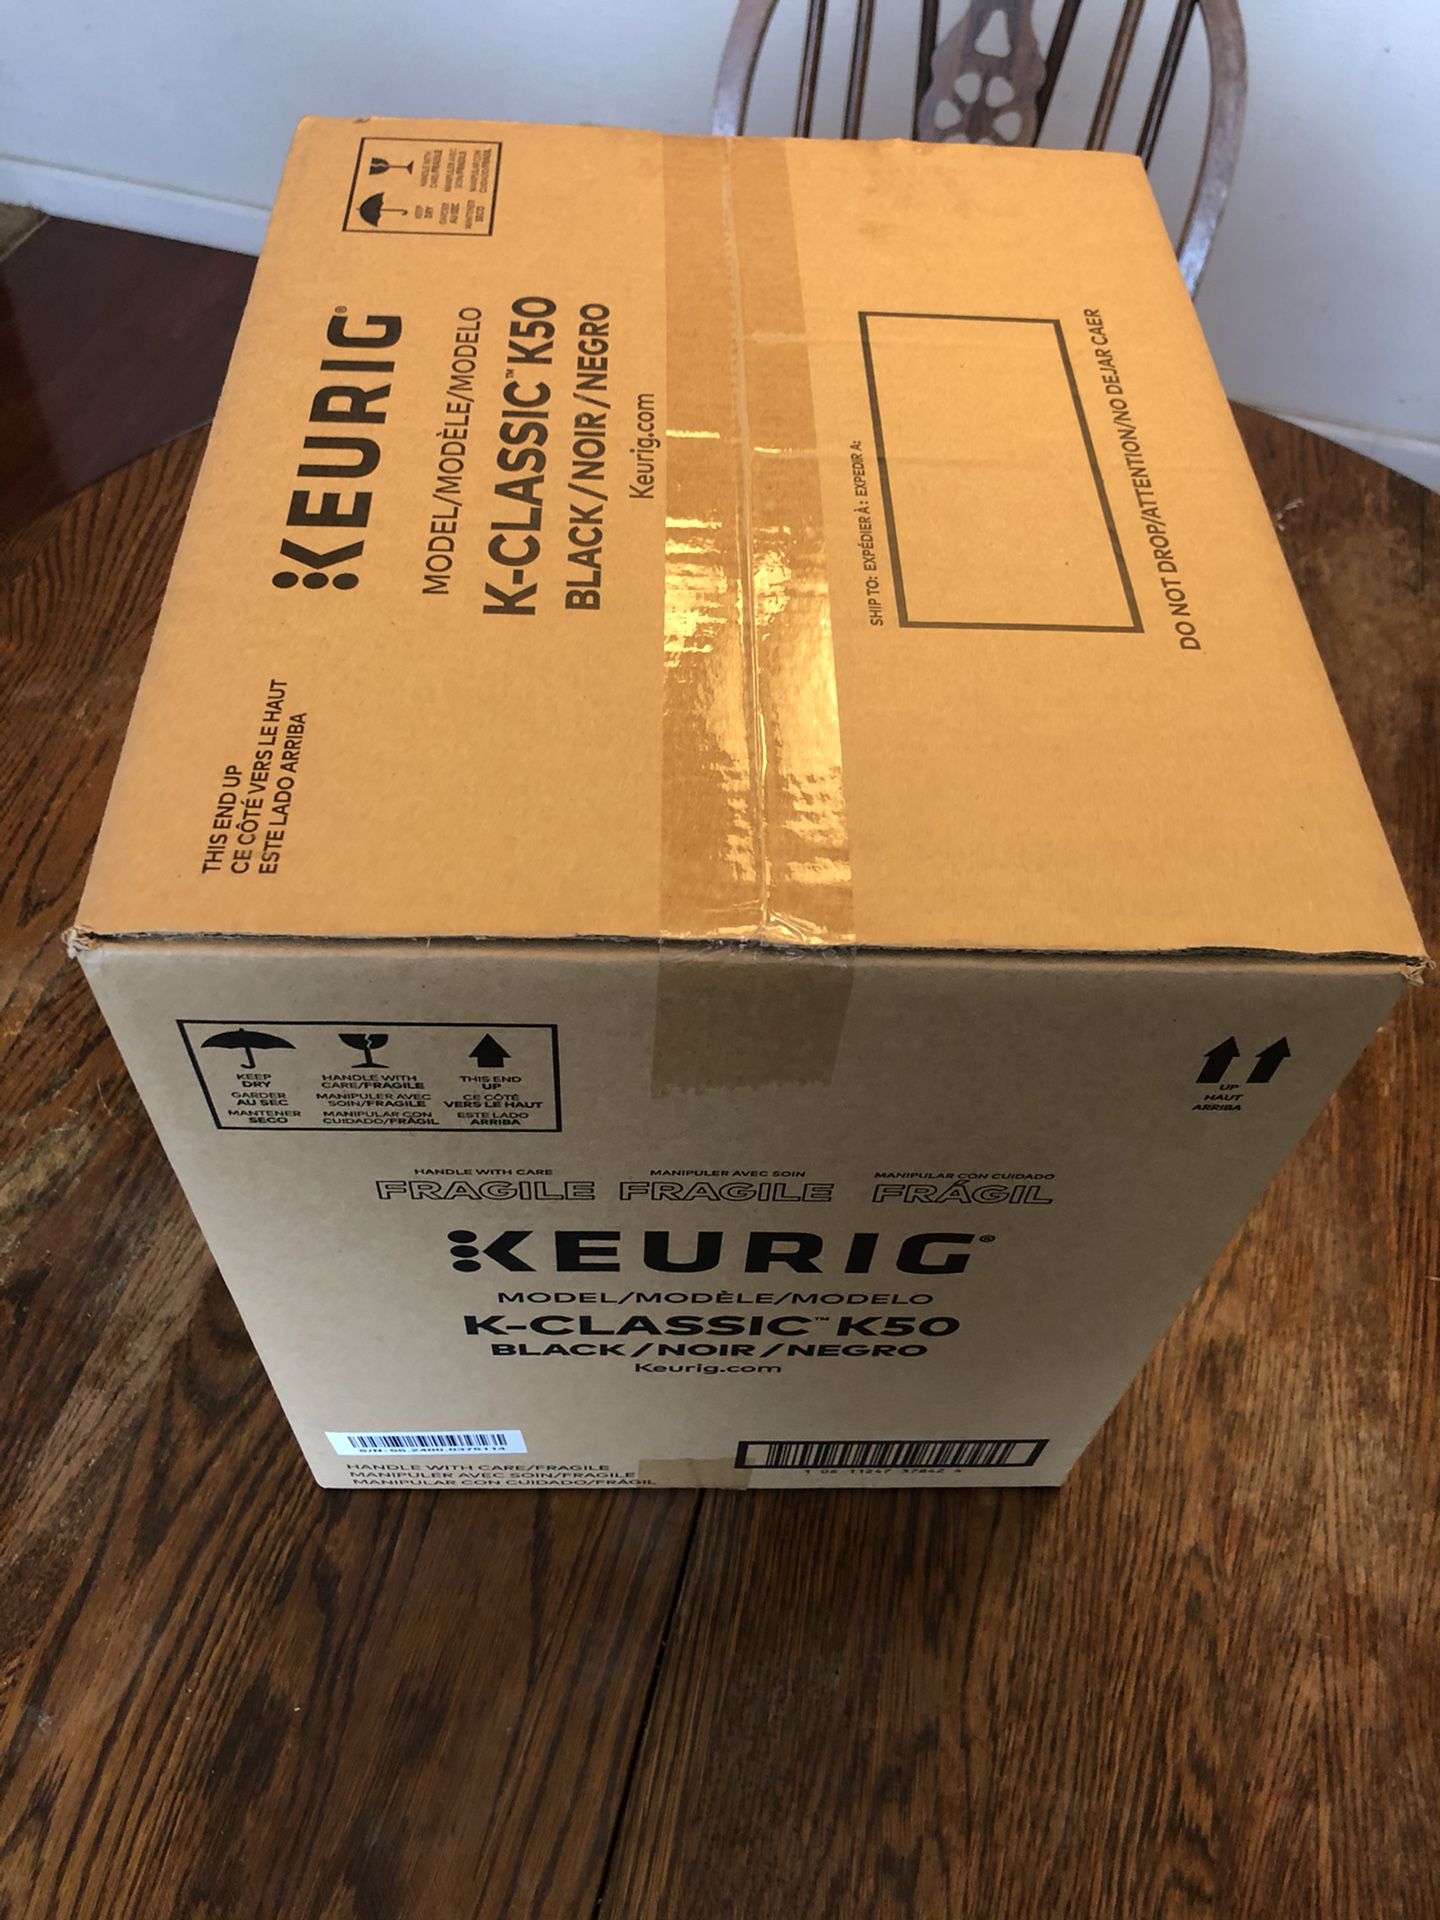 Keurig K-Classic K50 automatic coffee maker